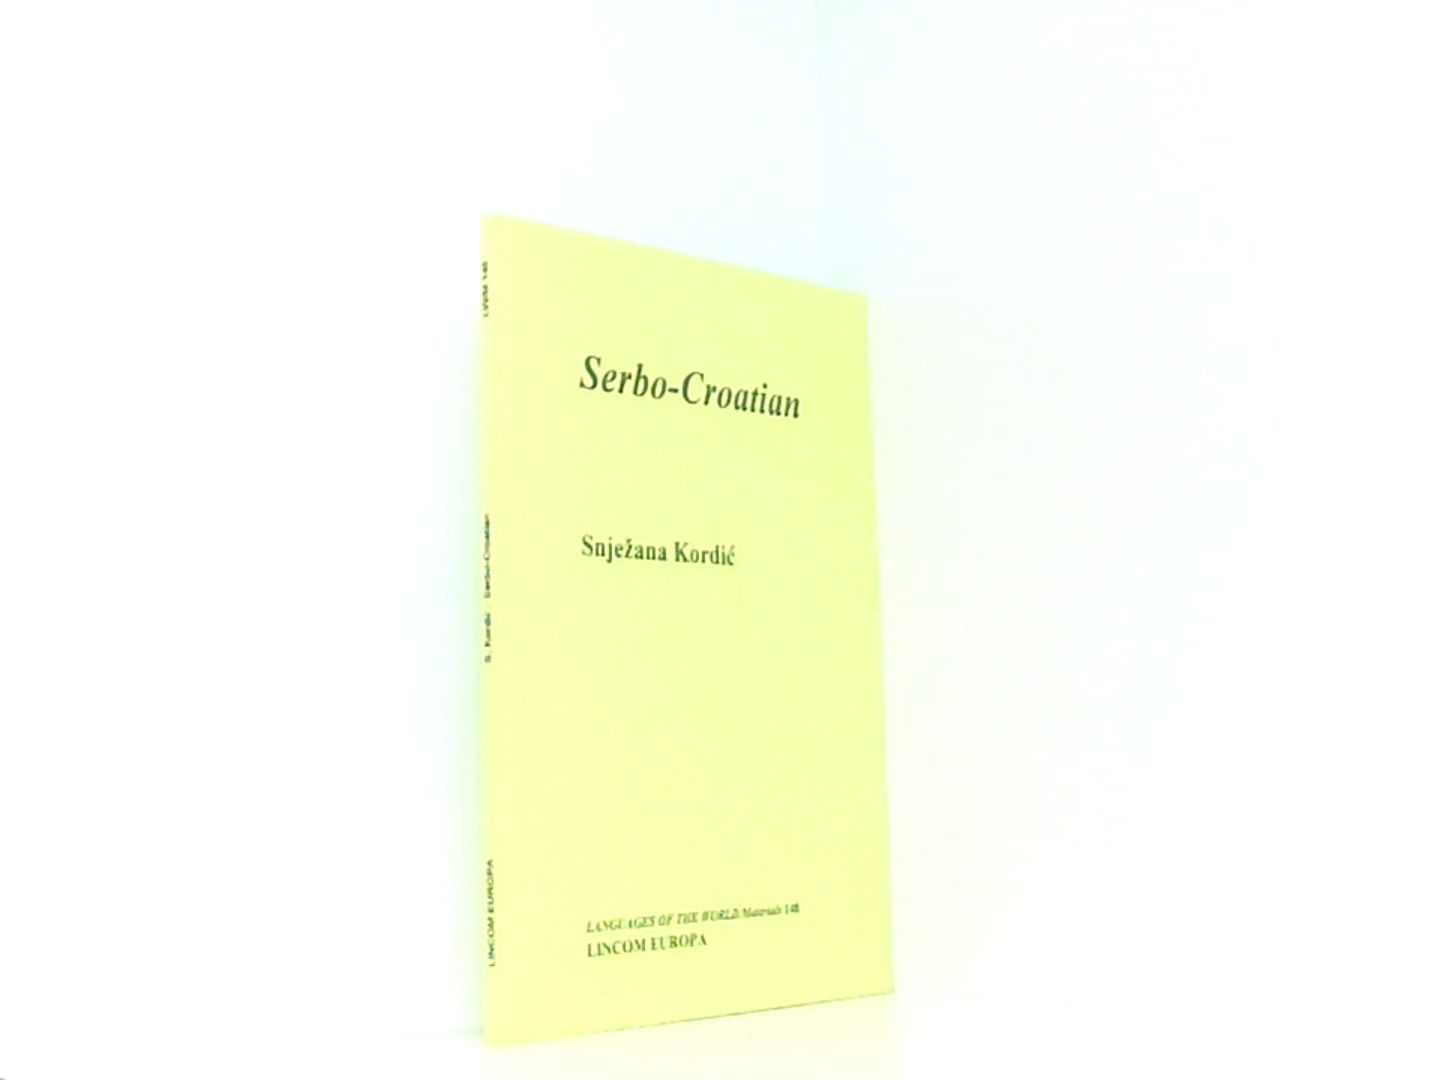 Serbo-Croatian (Languages of the World - Materials) - Kordic, Snjezana